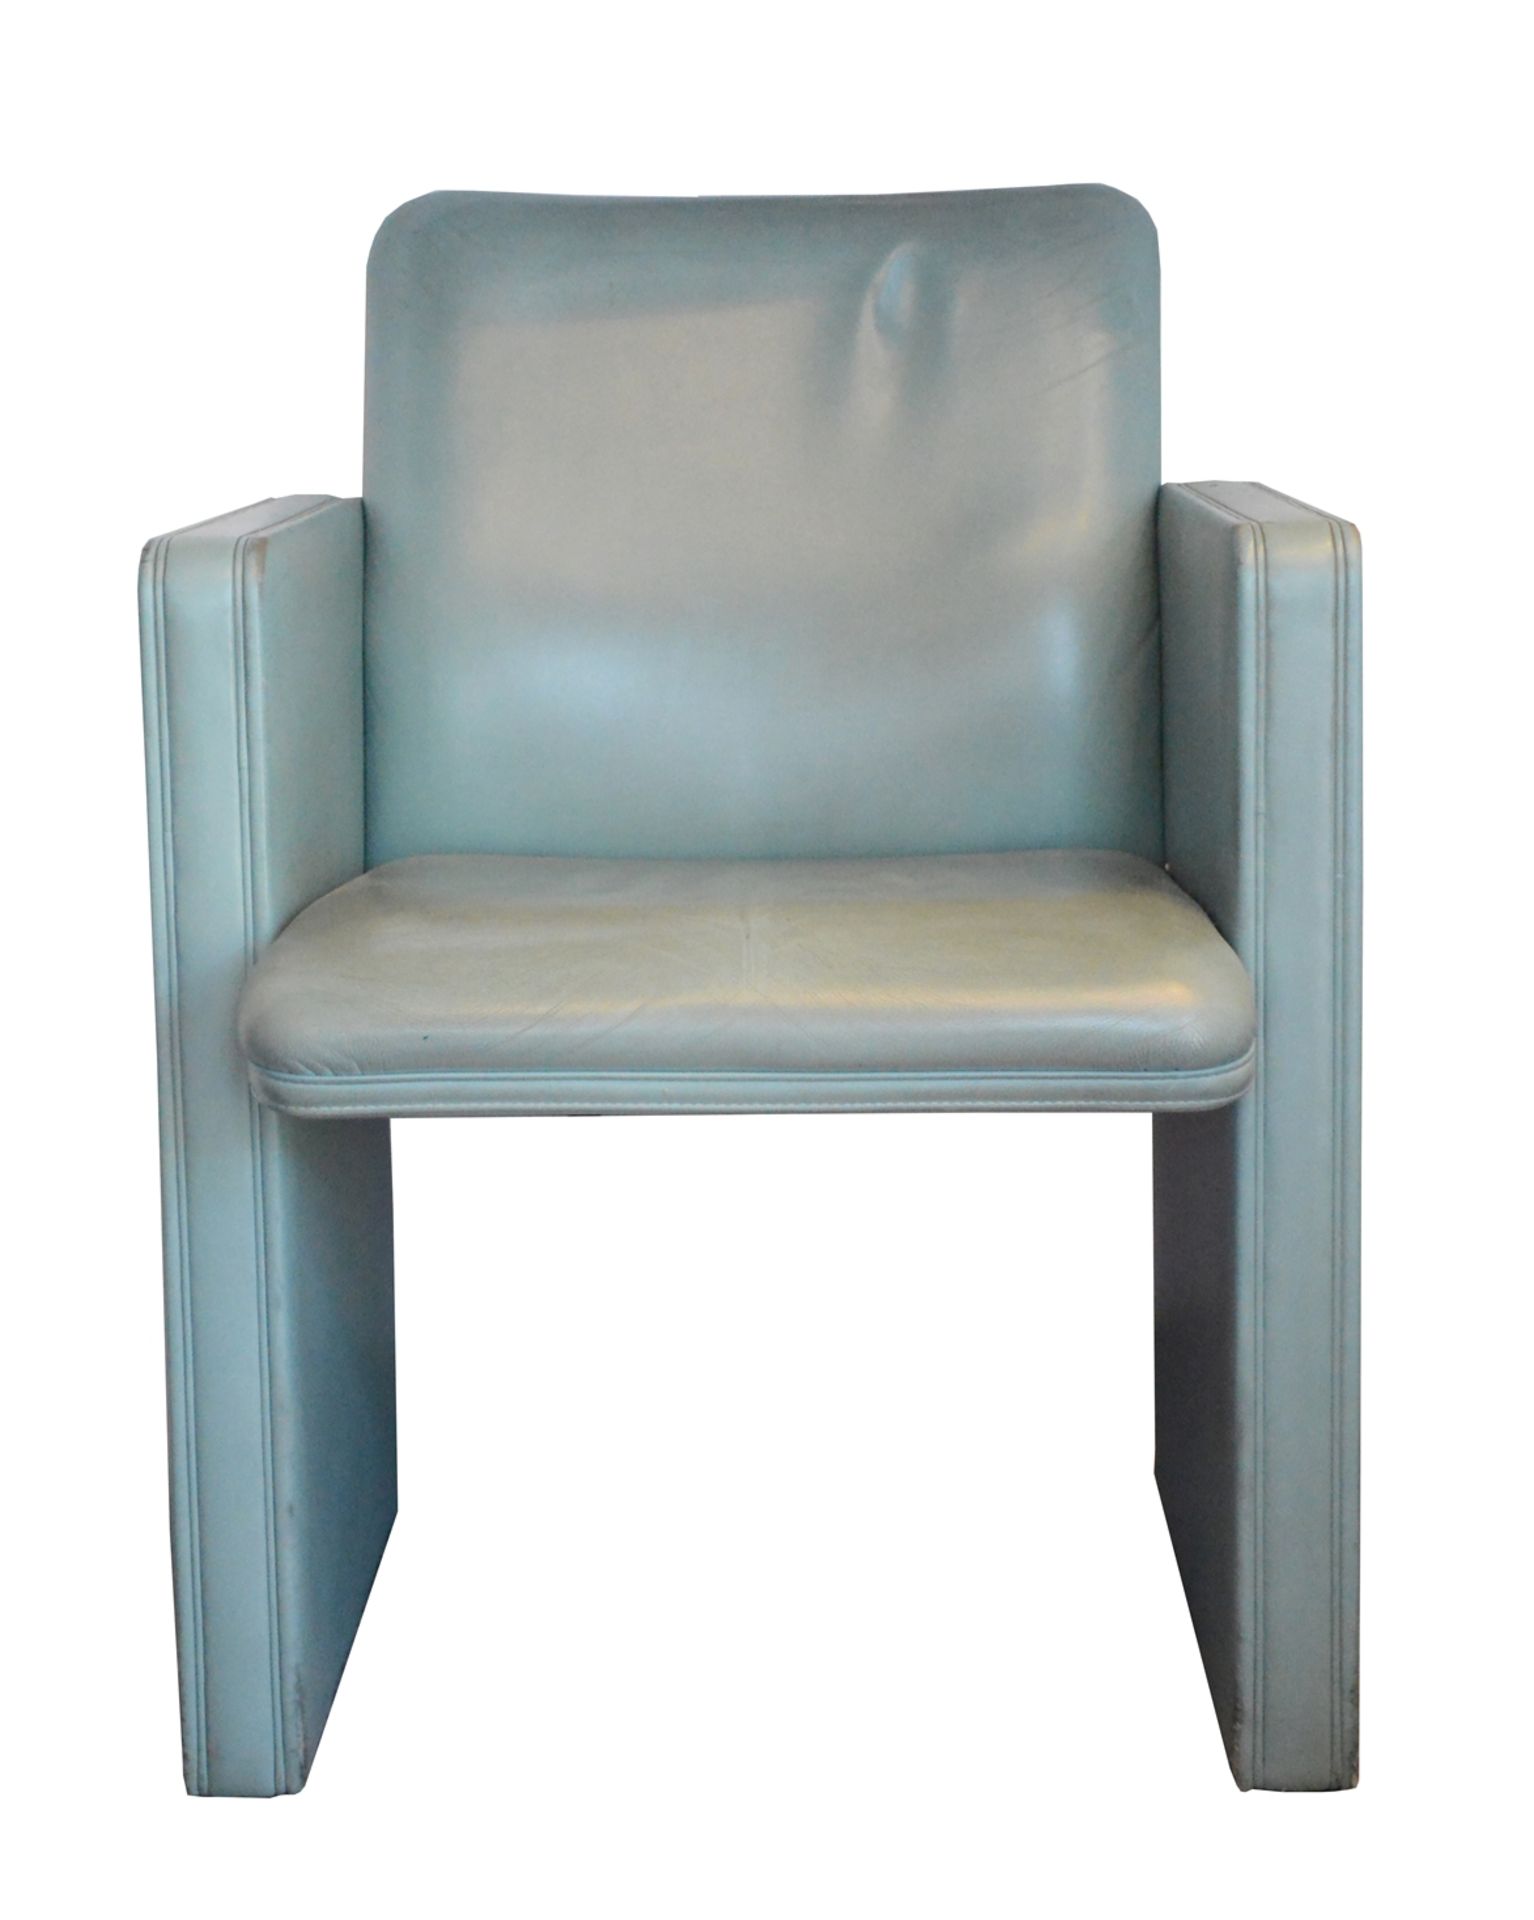 Zwei Sessel, Poltrona Frau, Tito Agnoli, graugrün, 83x60x53cm, Sitzhöhe 47cmTwo armchairs, - Image 3 of 4